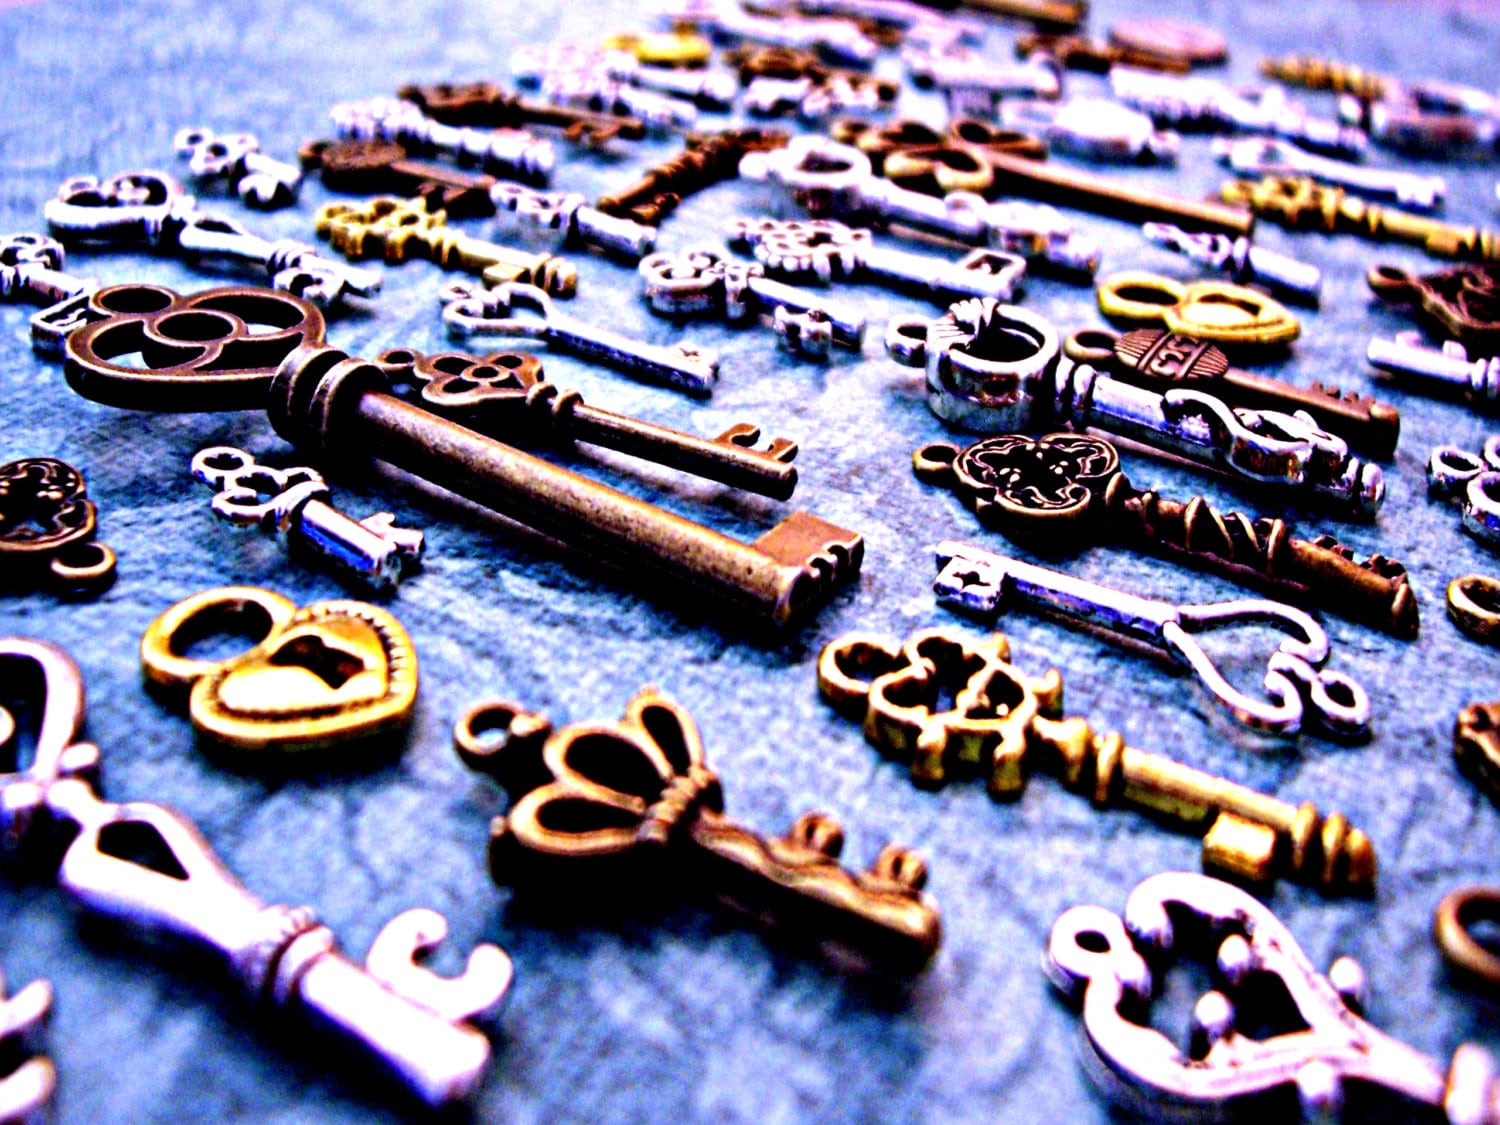 Antique Skeleton Key Rare GENUINE 17-18th C. - More Rare Old Vintage Keys  Here!